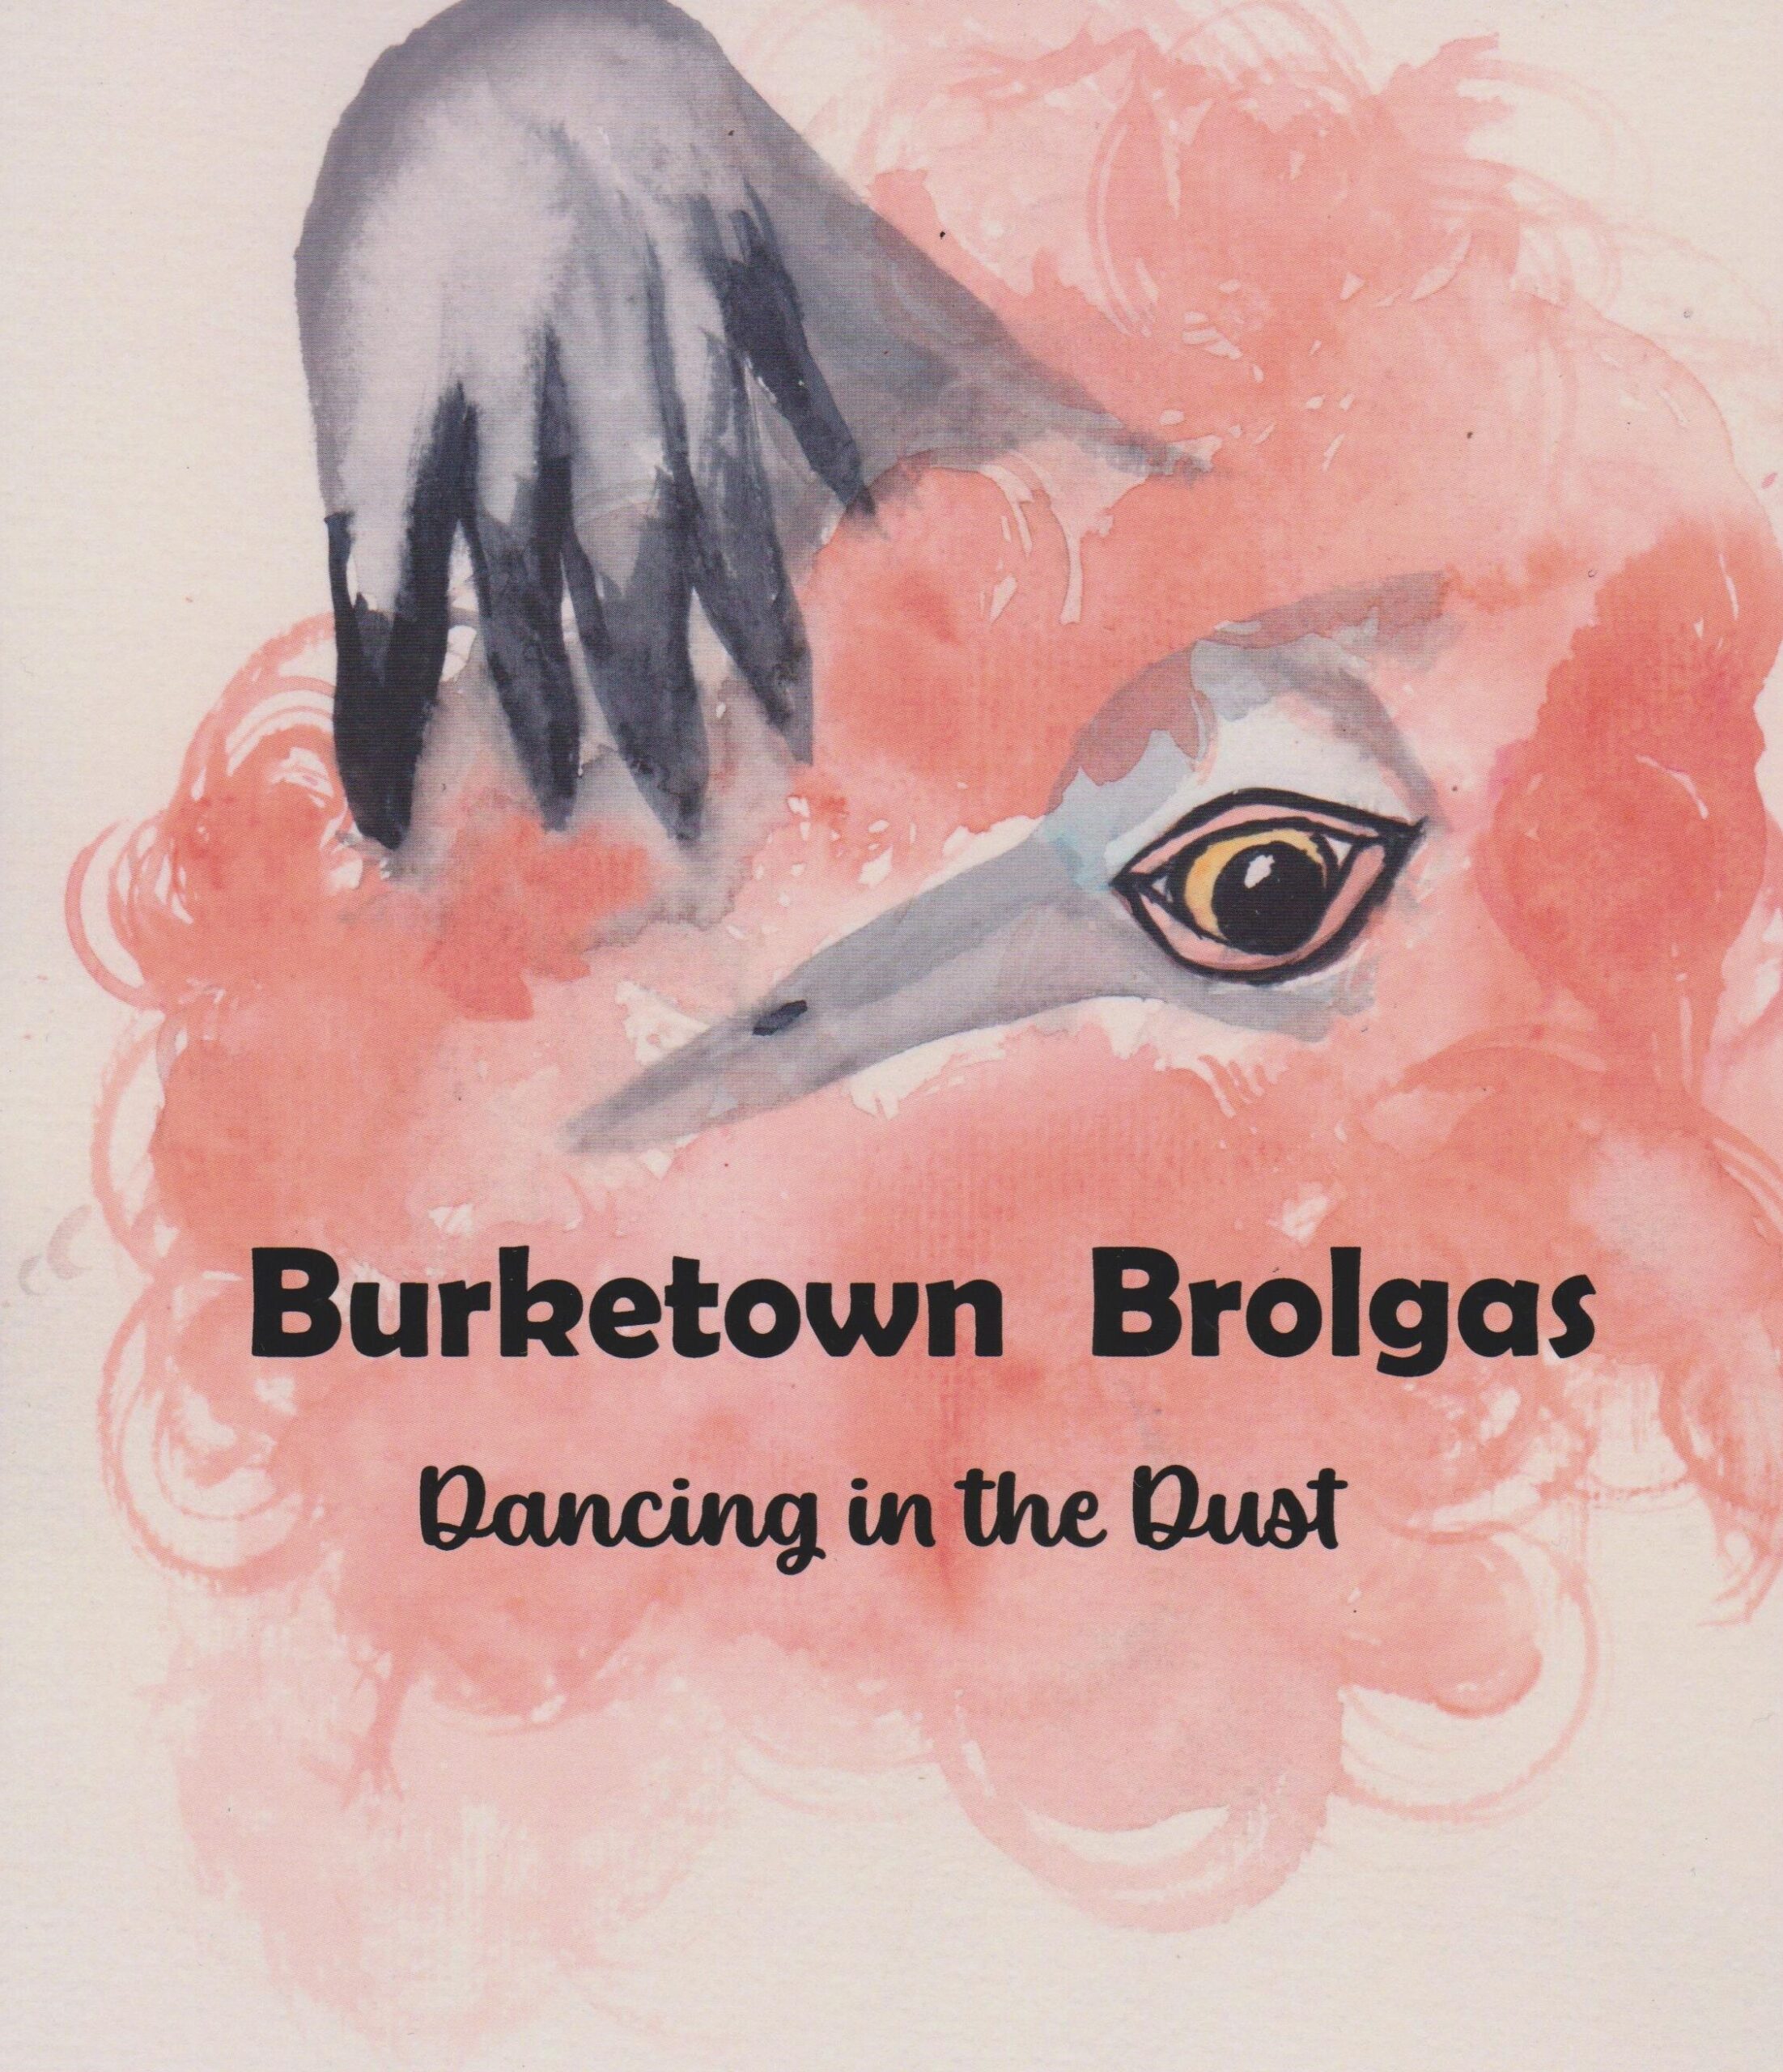 Burketown Brolgas Dancing in the Dust Front cover